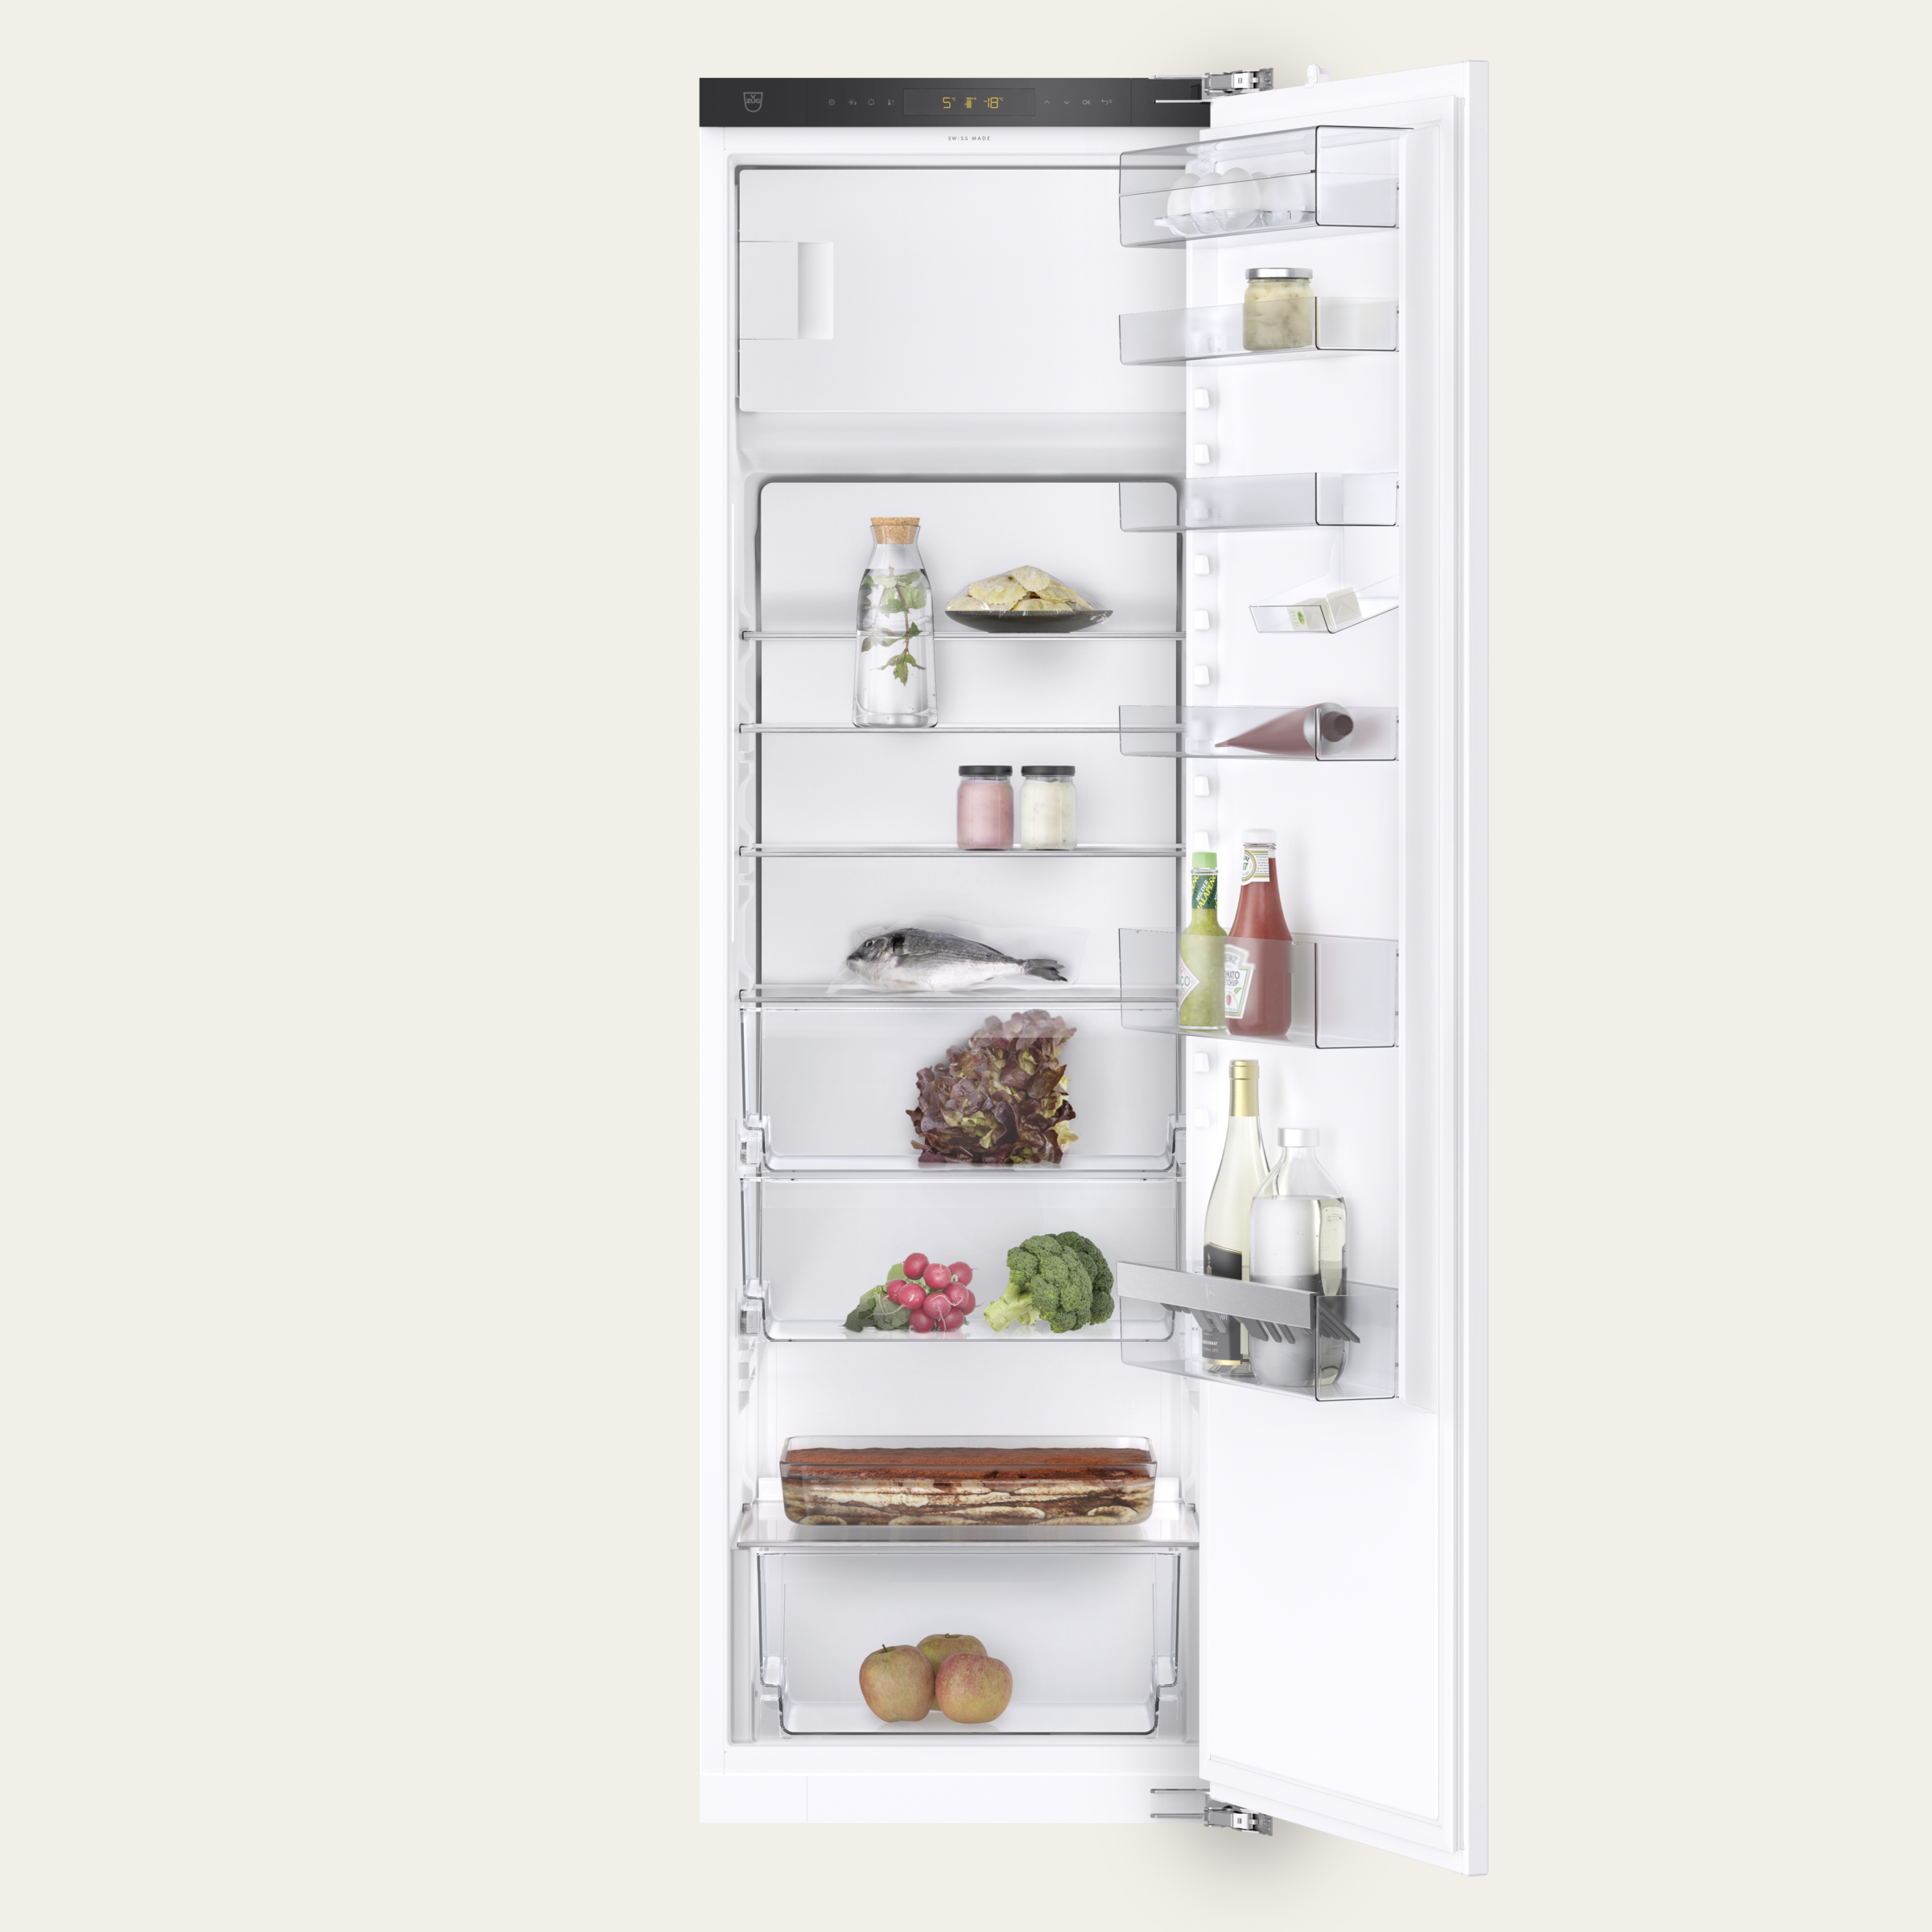 V-ZUG Refrigerator/freezer Cooler V2000 178GI, Standard width: 60 cm, Standard height: 177.8 cm, Fully integratable, Door hinge: Right, Energy efficiency class: D, TouchControl